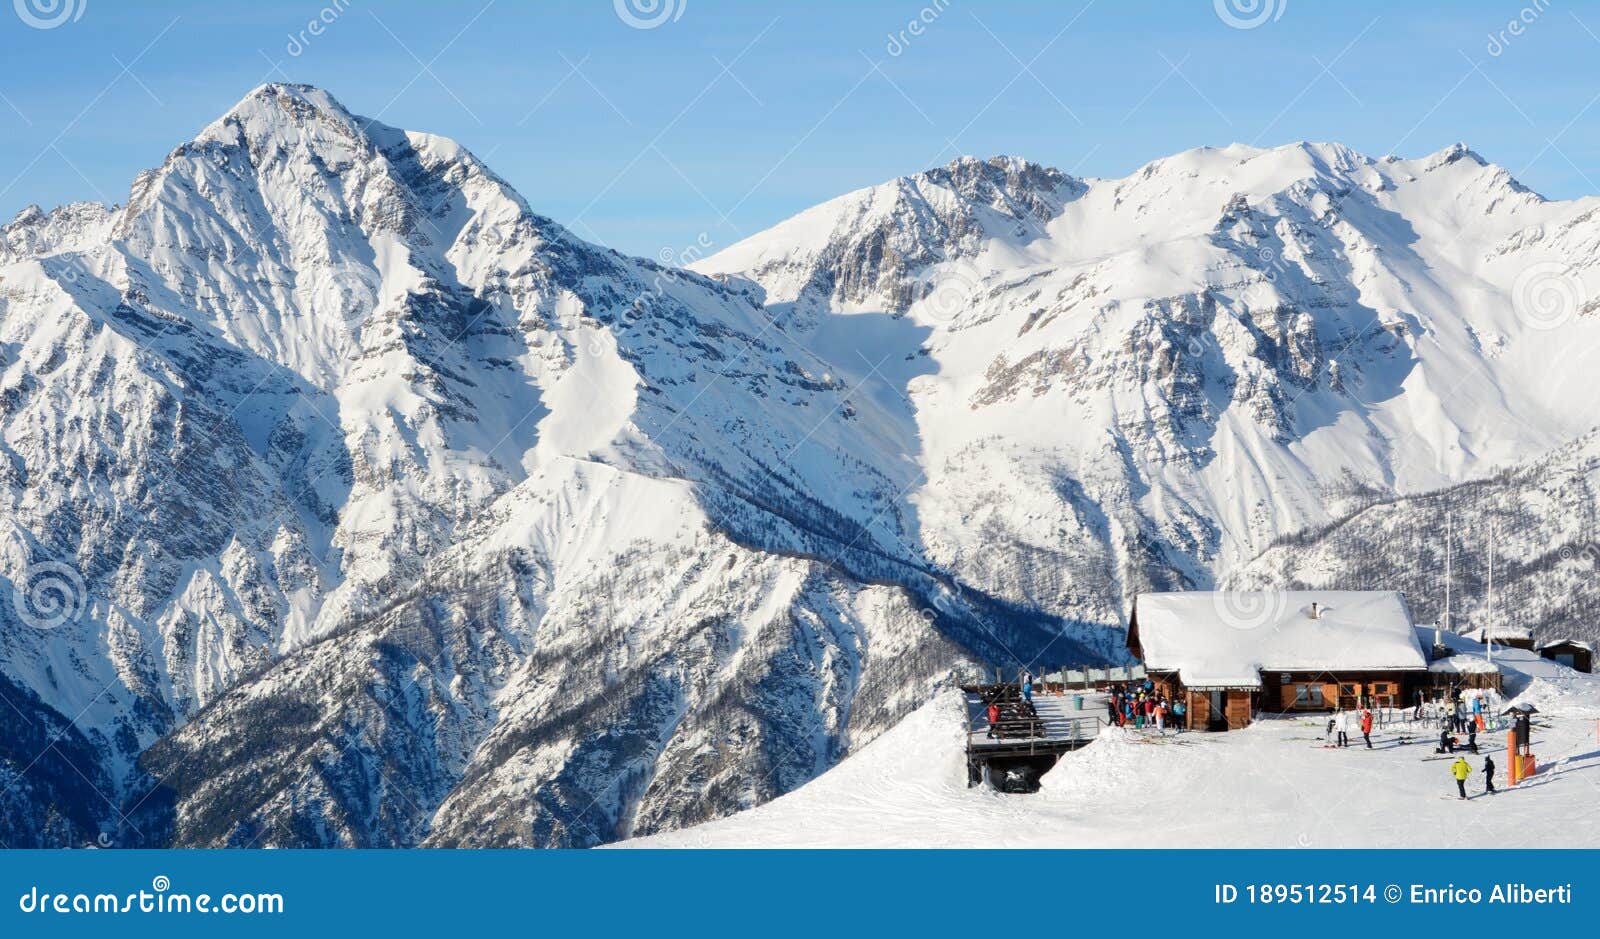 ski holidays on the slopes of the italian alps